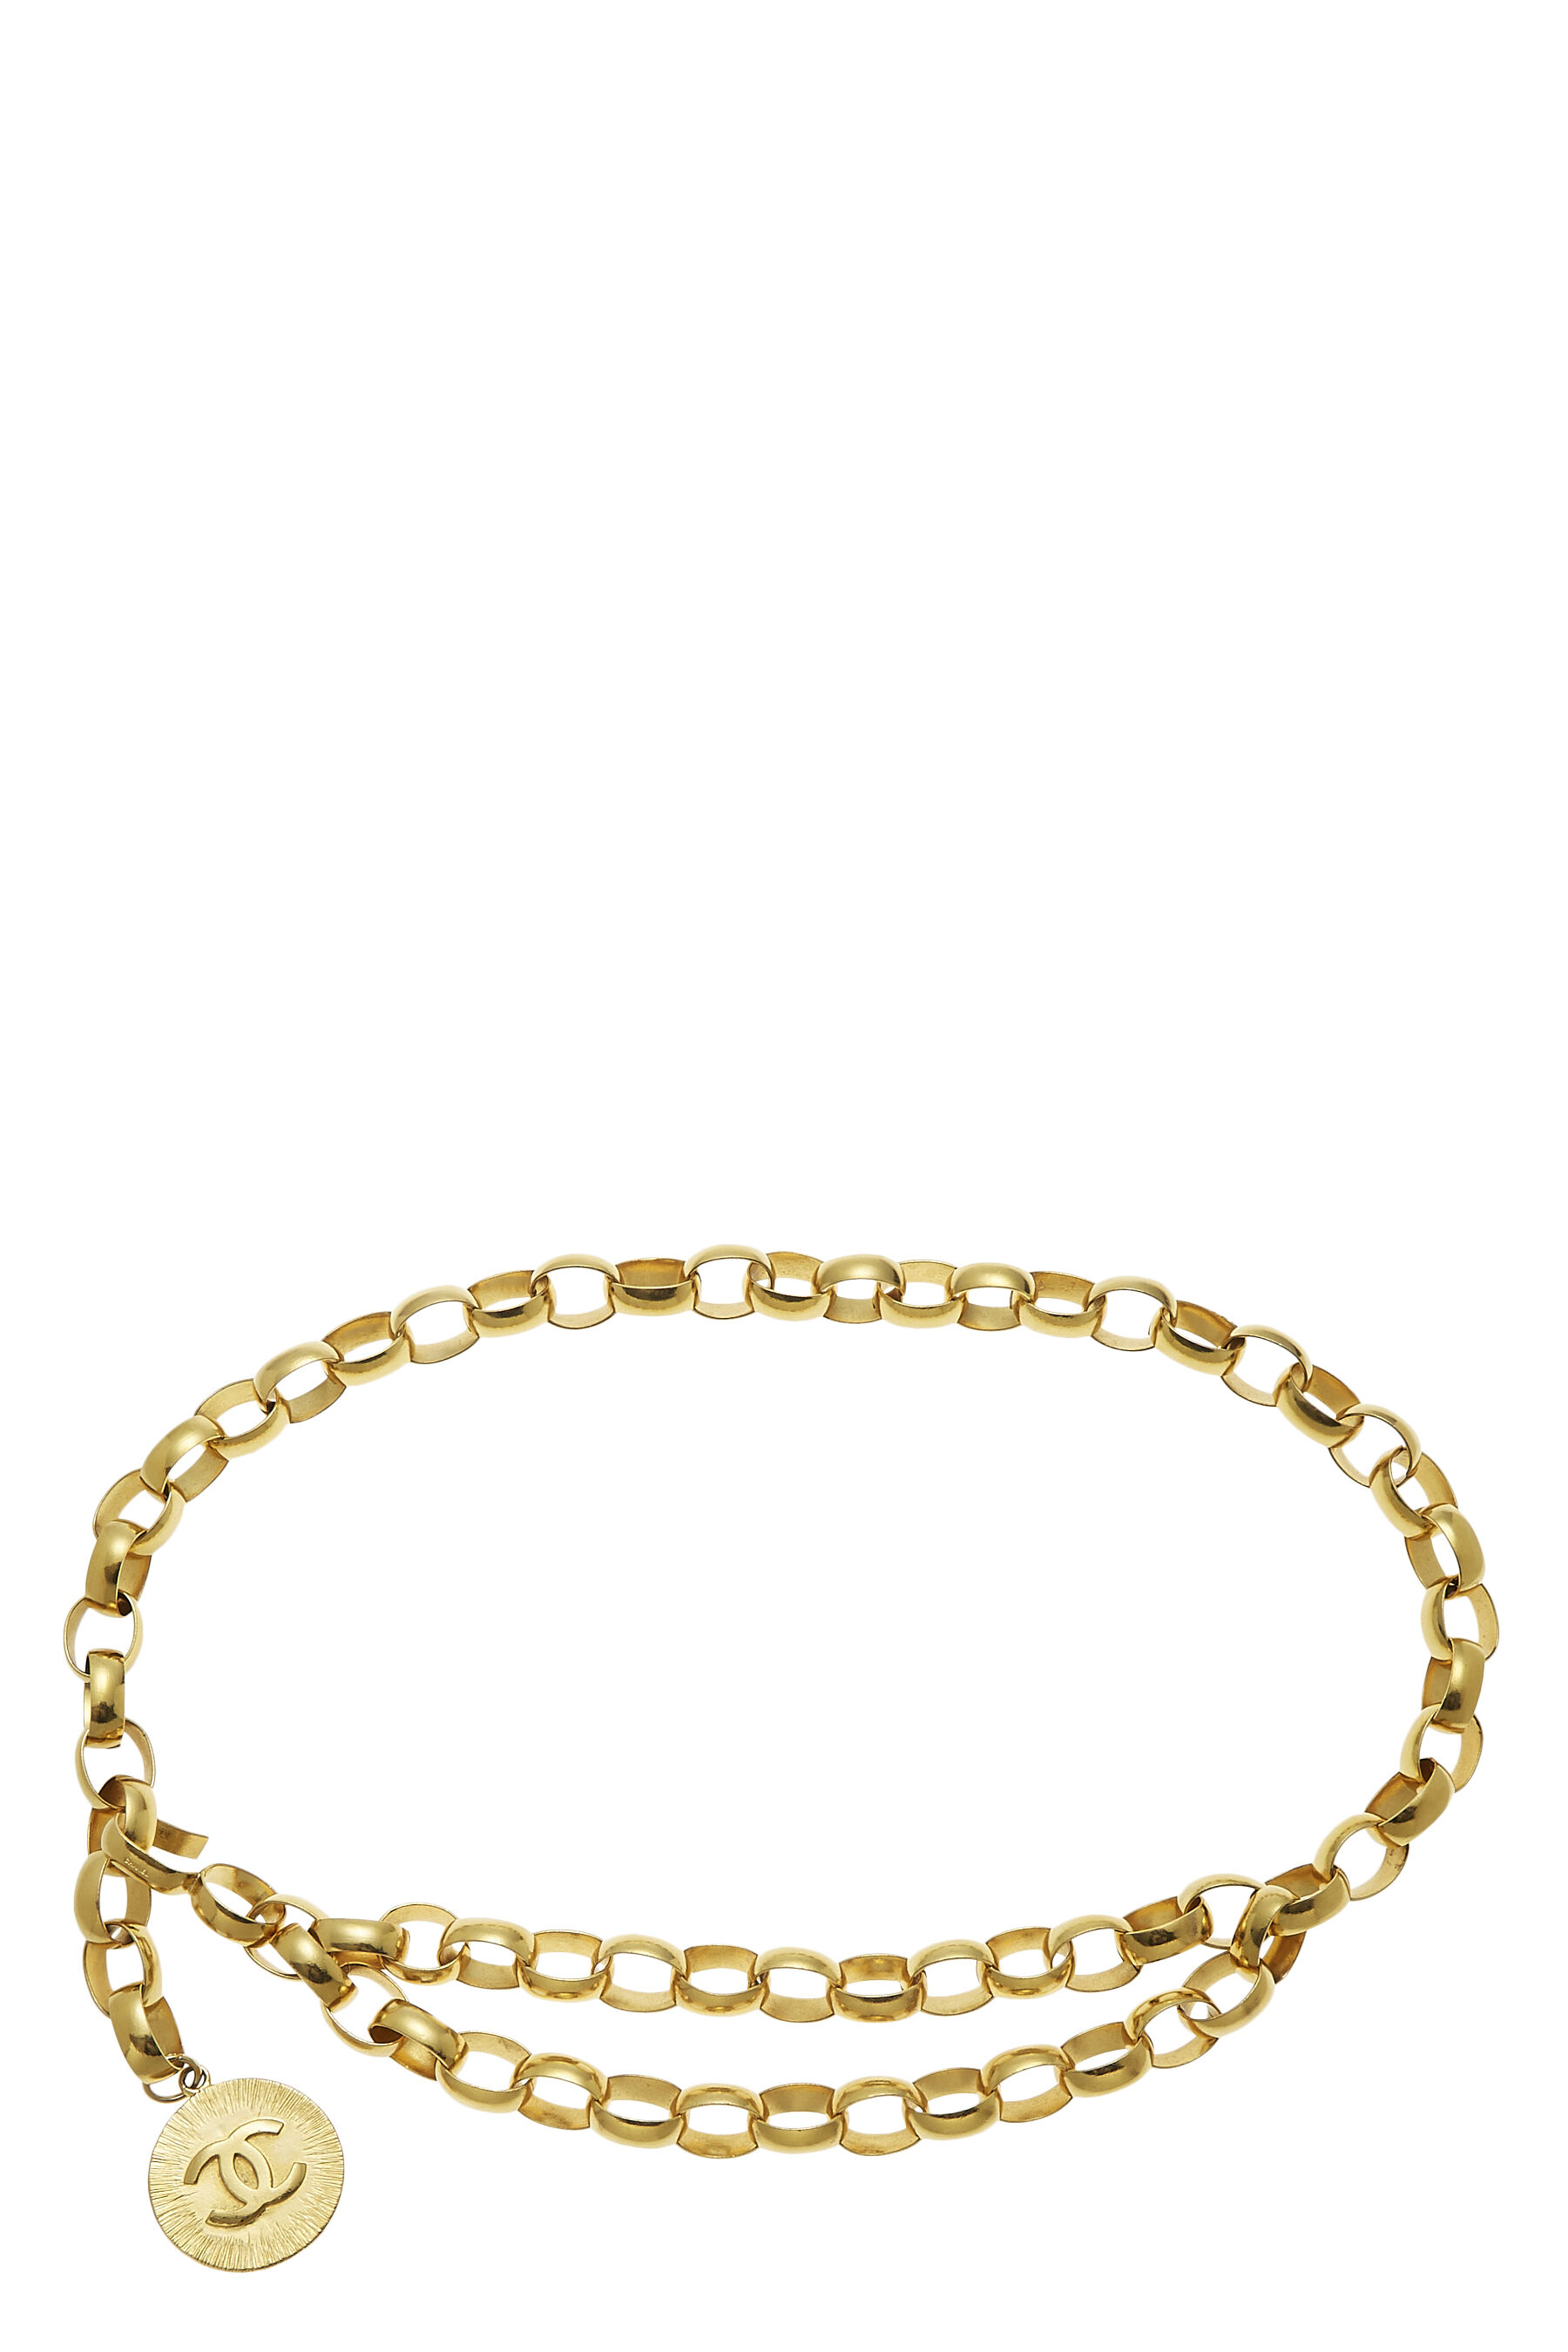 Chanel - Gold 'CC' Sunburst Chain Belt 2